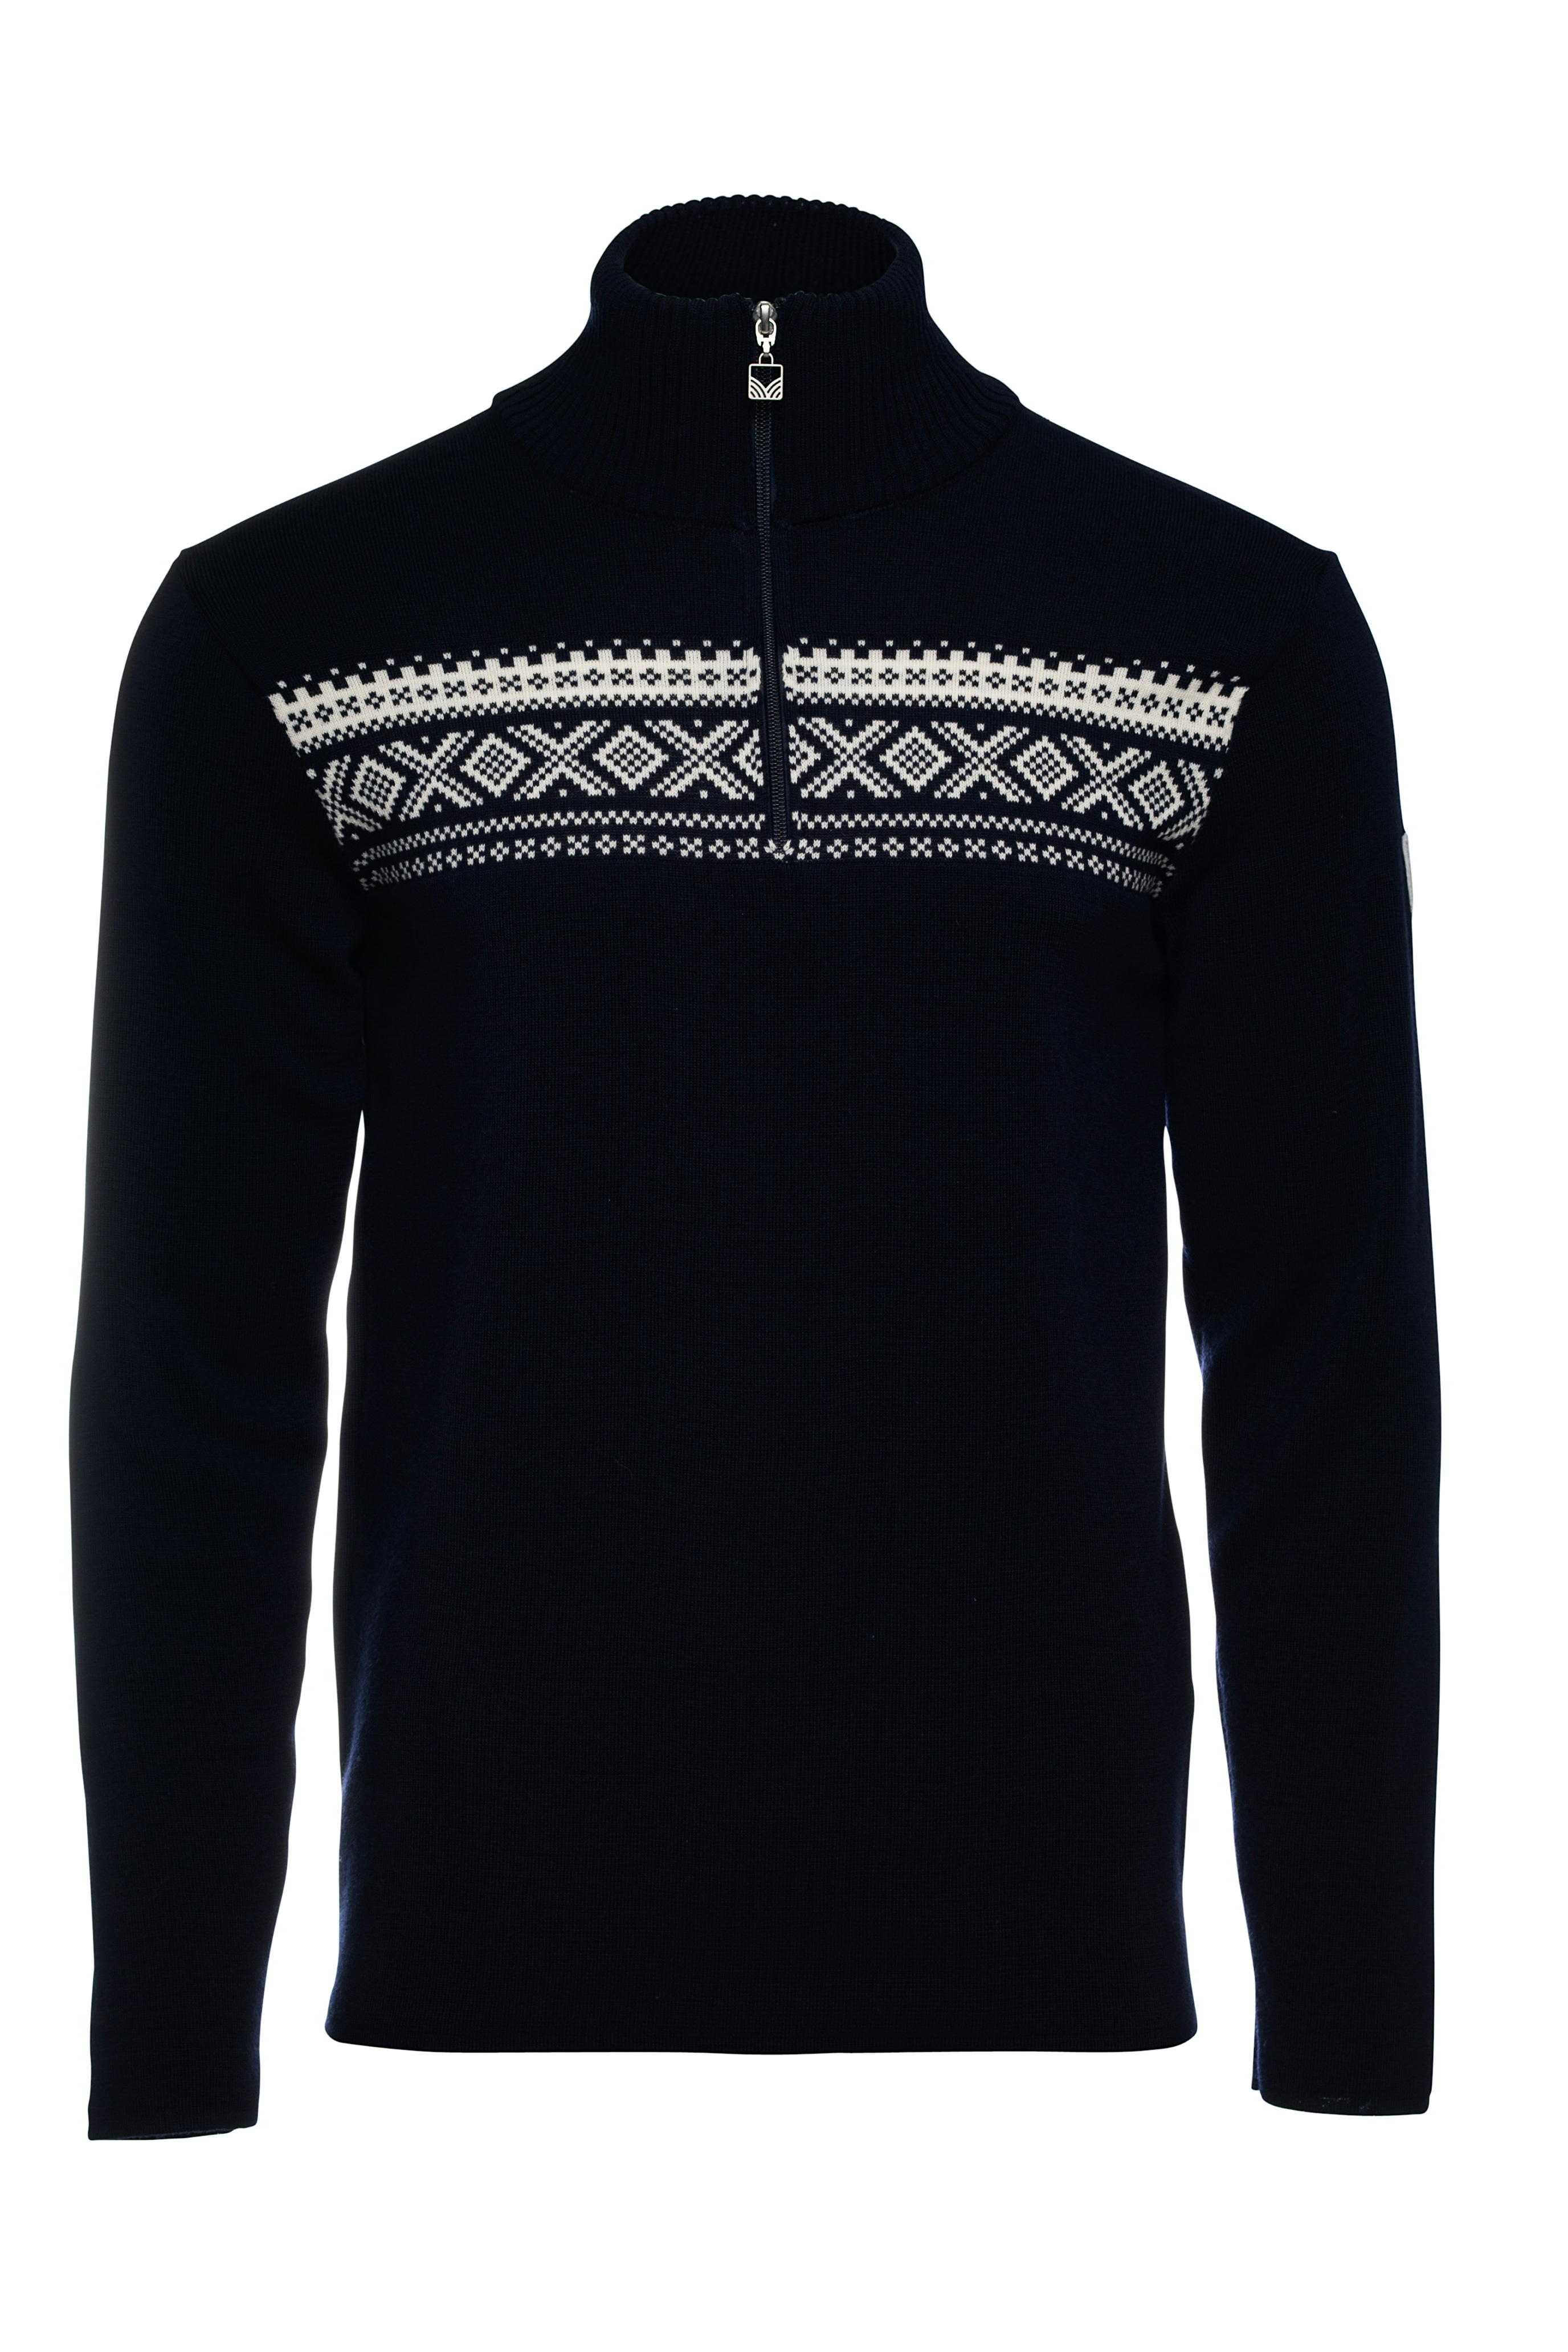 Dalestølen sweater - Men - Navy/Offwhite - Dale of Norway - Dale